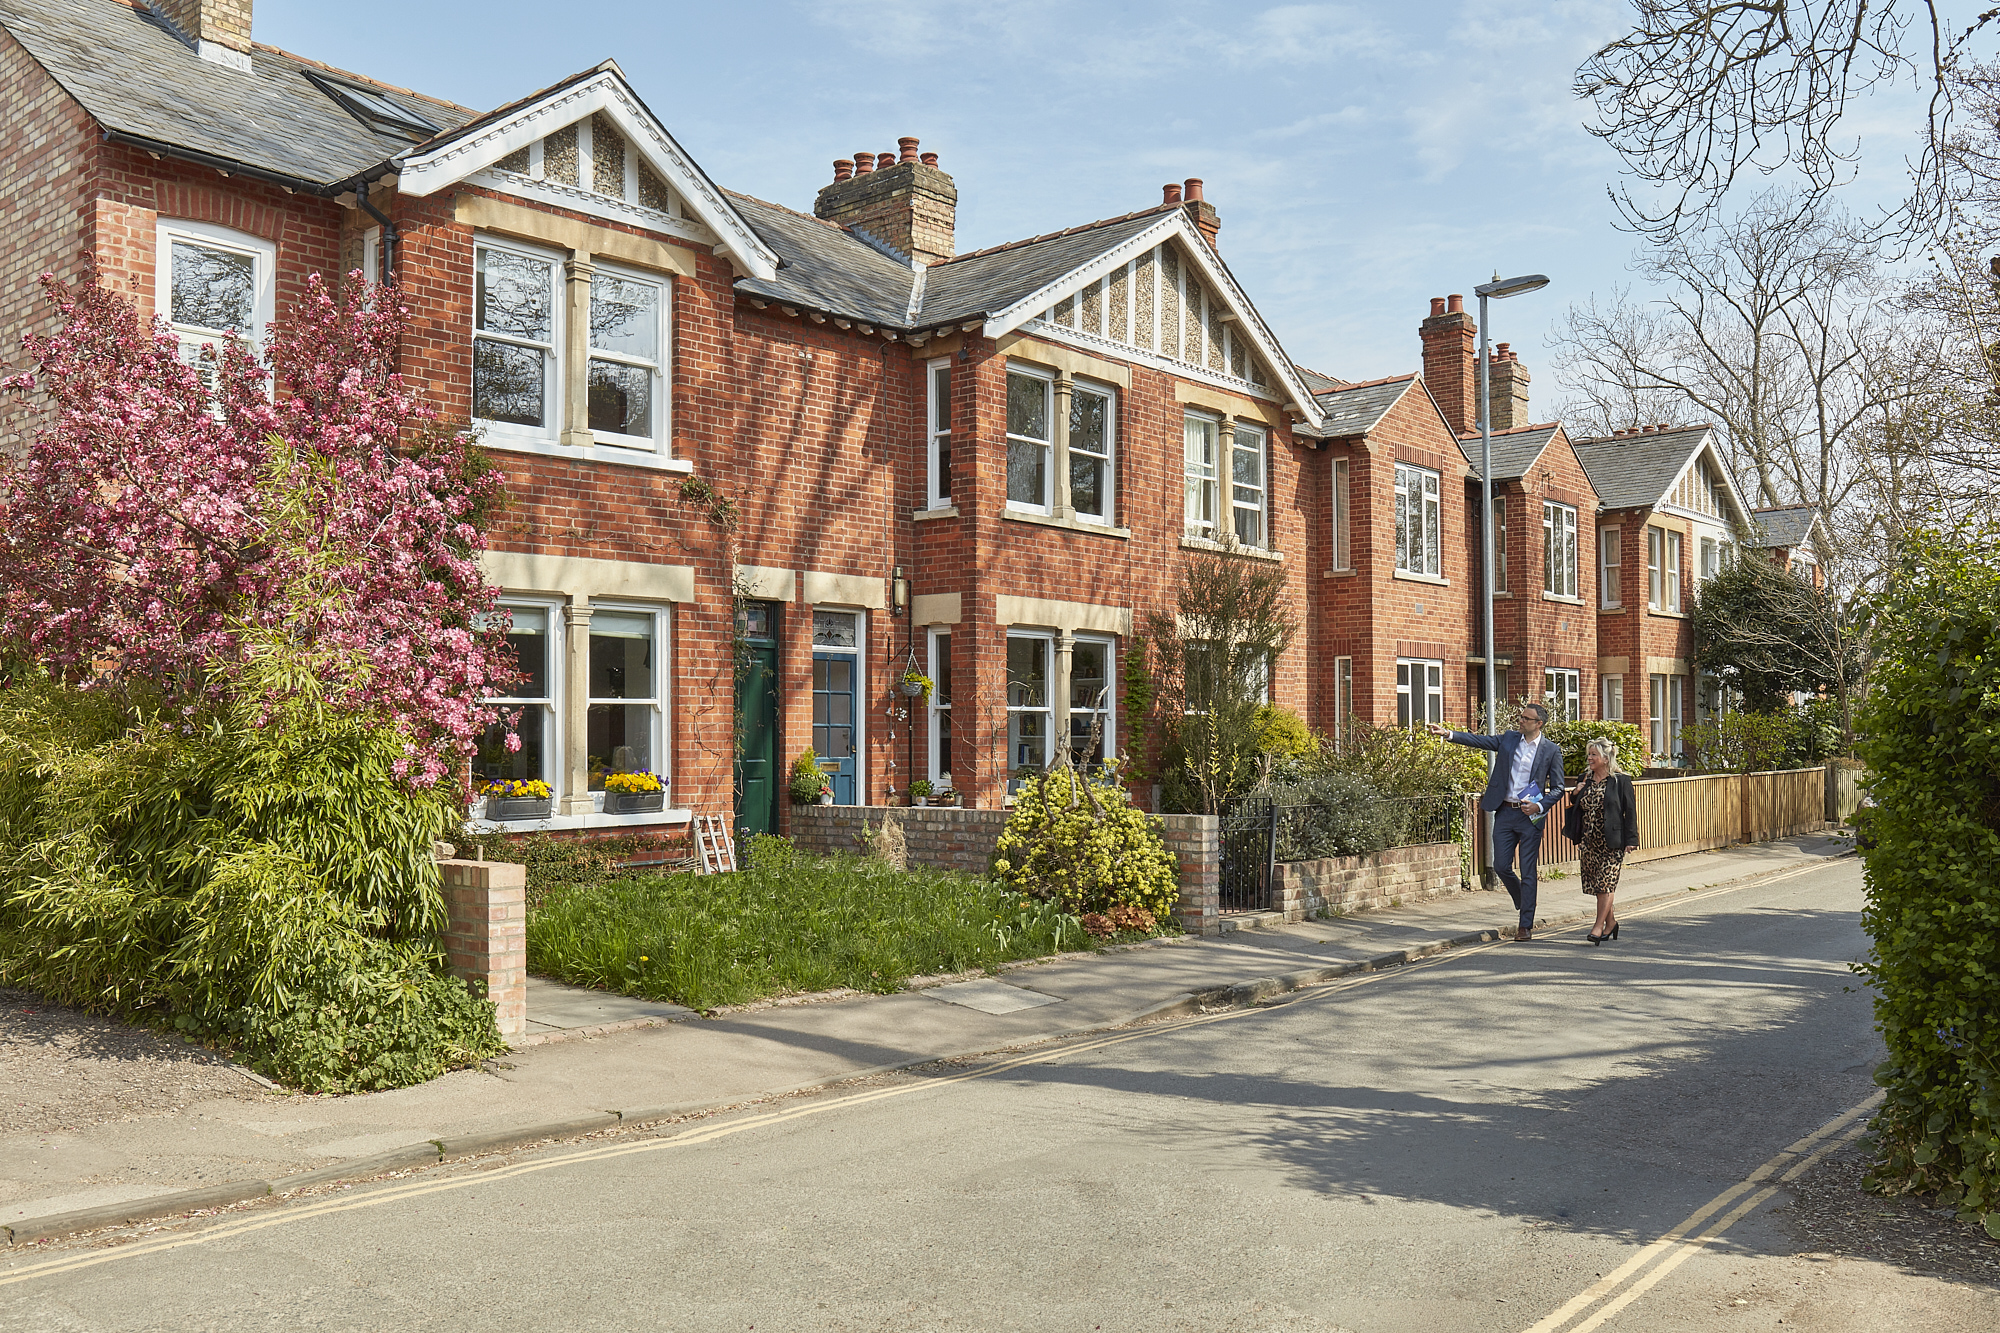 Cambridge Residential Rental Market Report Winter 2022